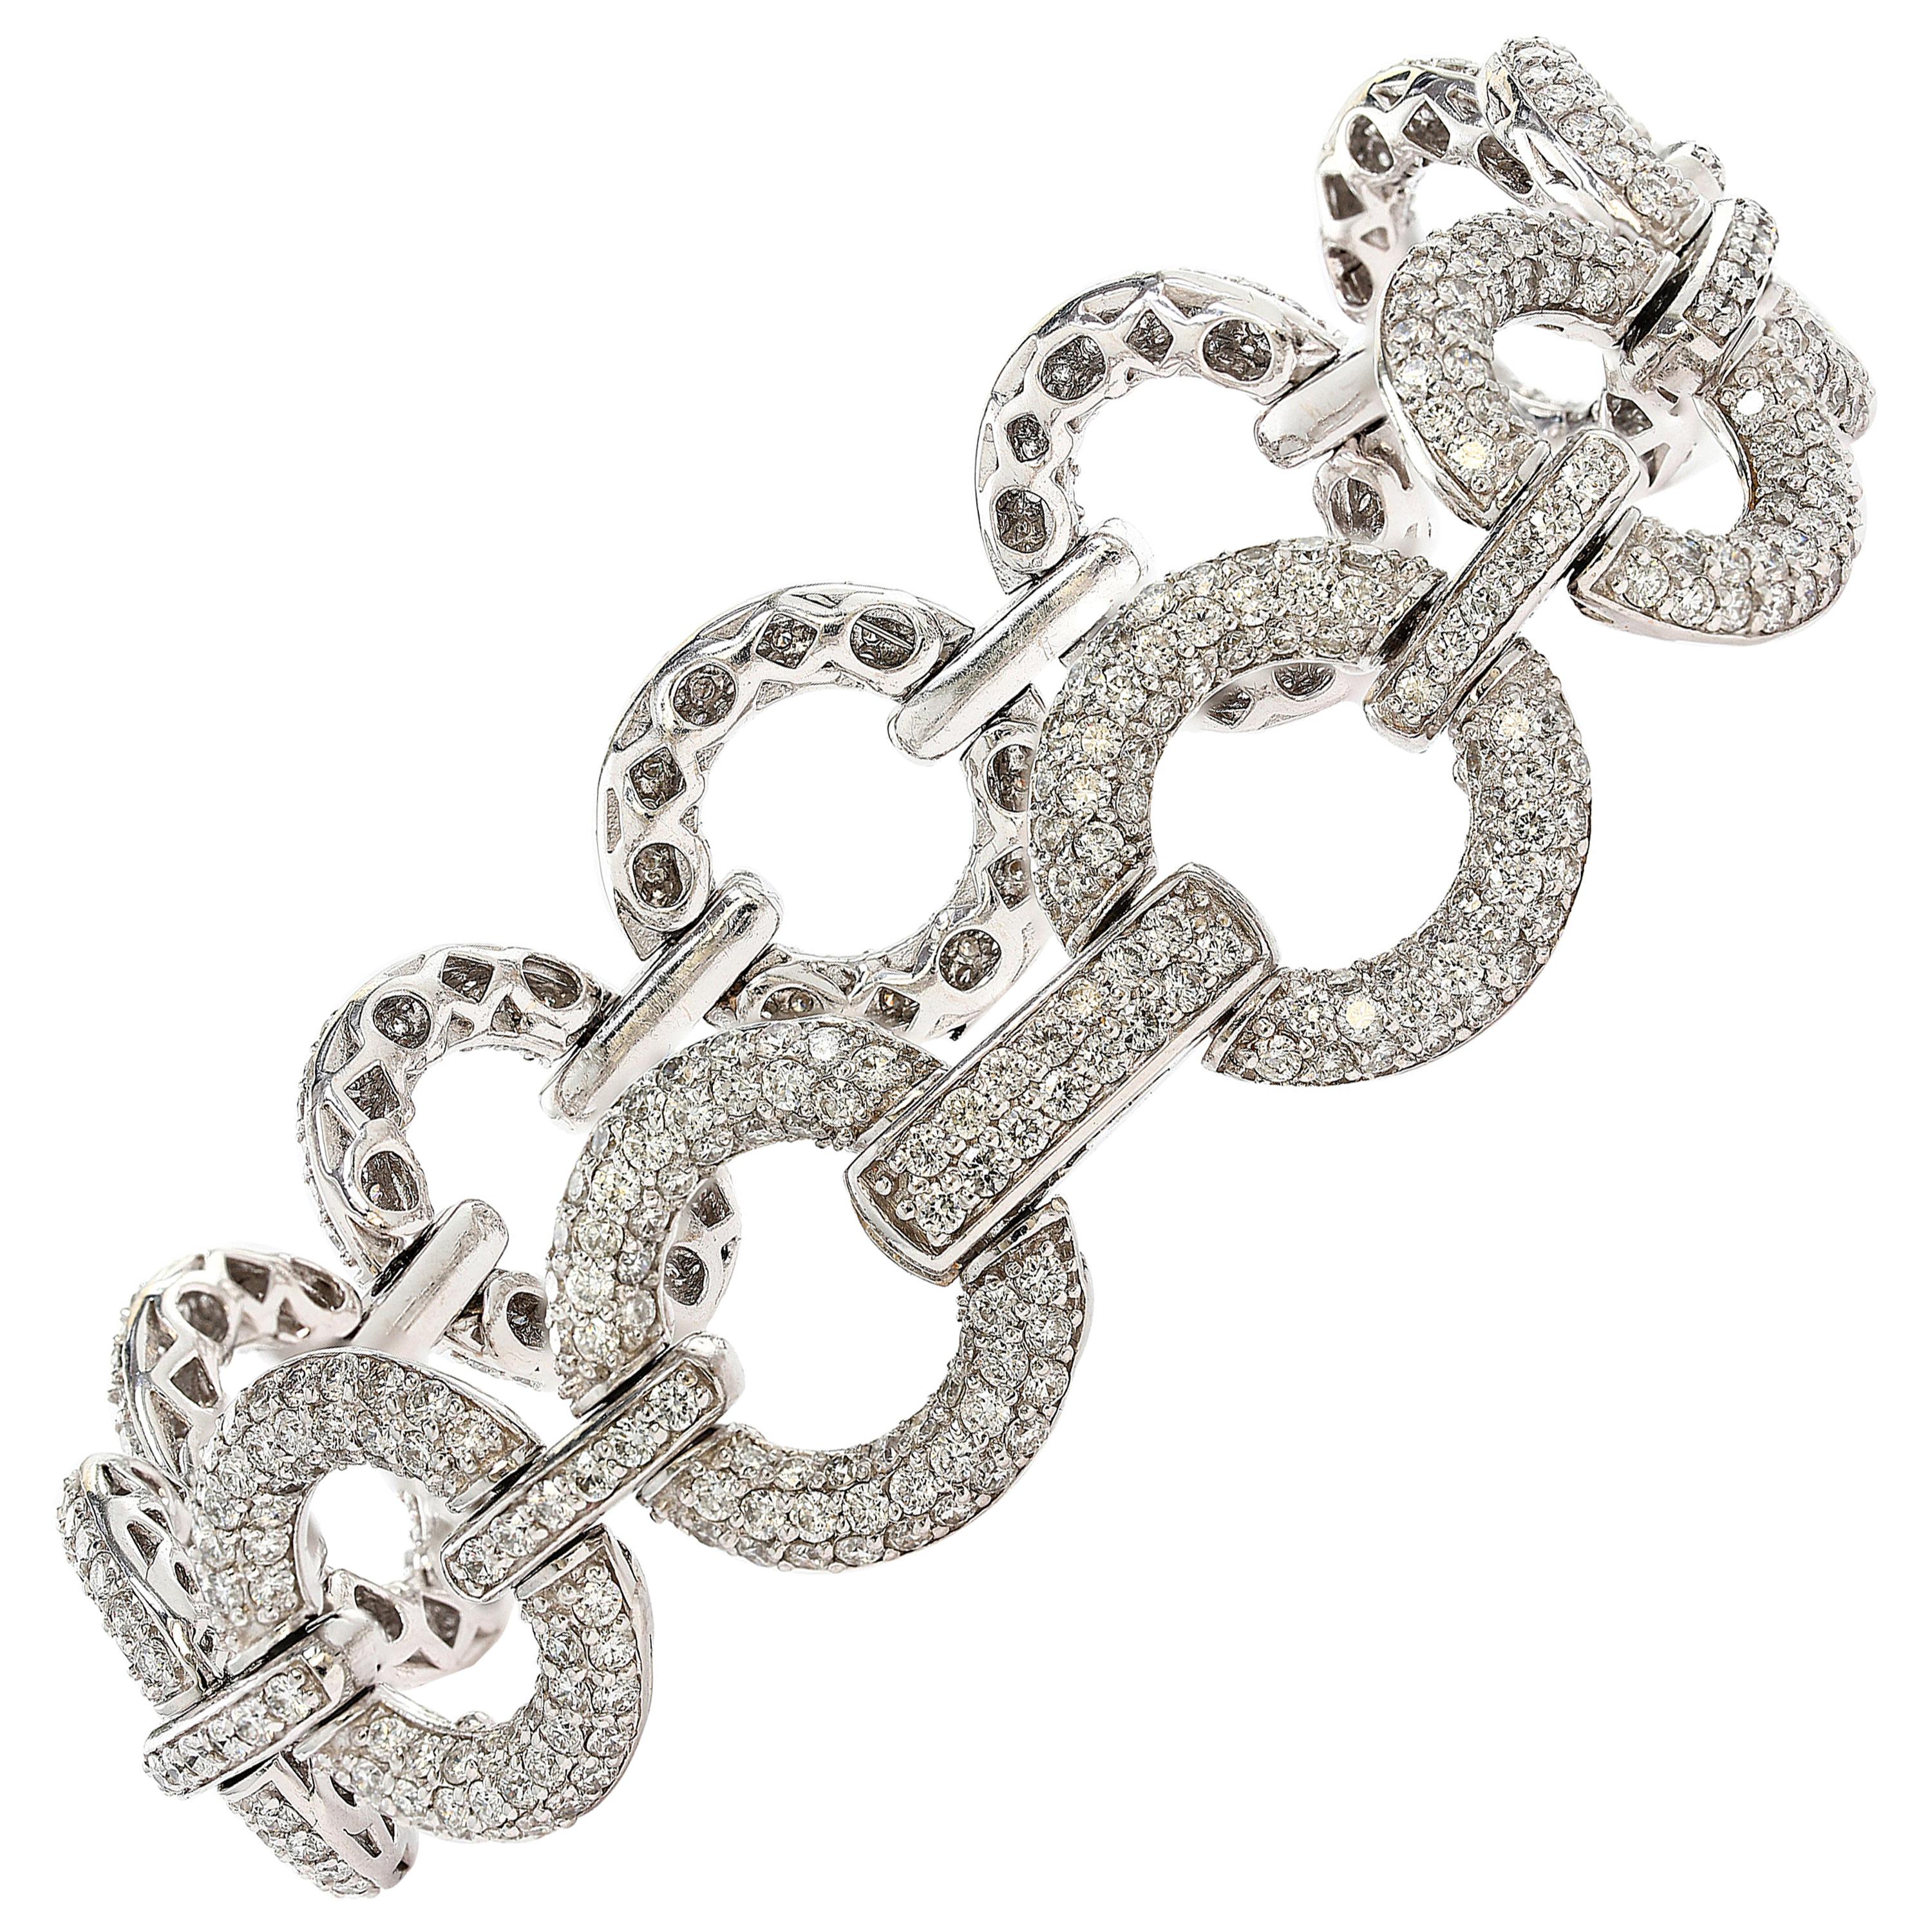 7.71 Carat Diamond Bracelet in 18K White Gold For Sale at 1stDibs